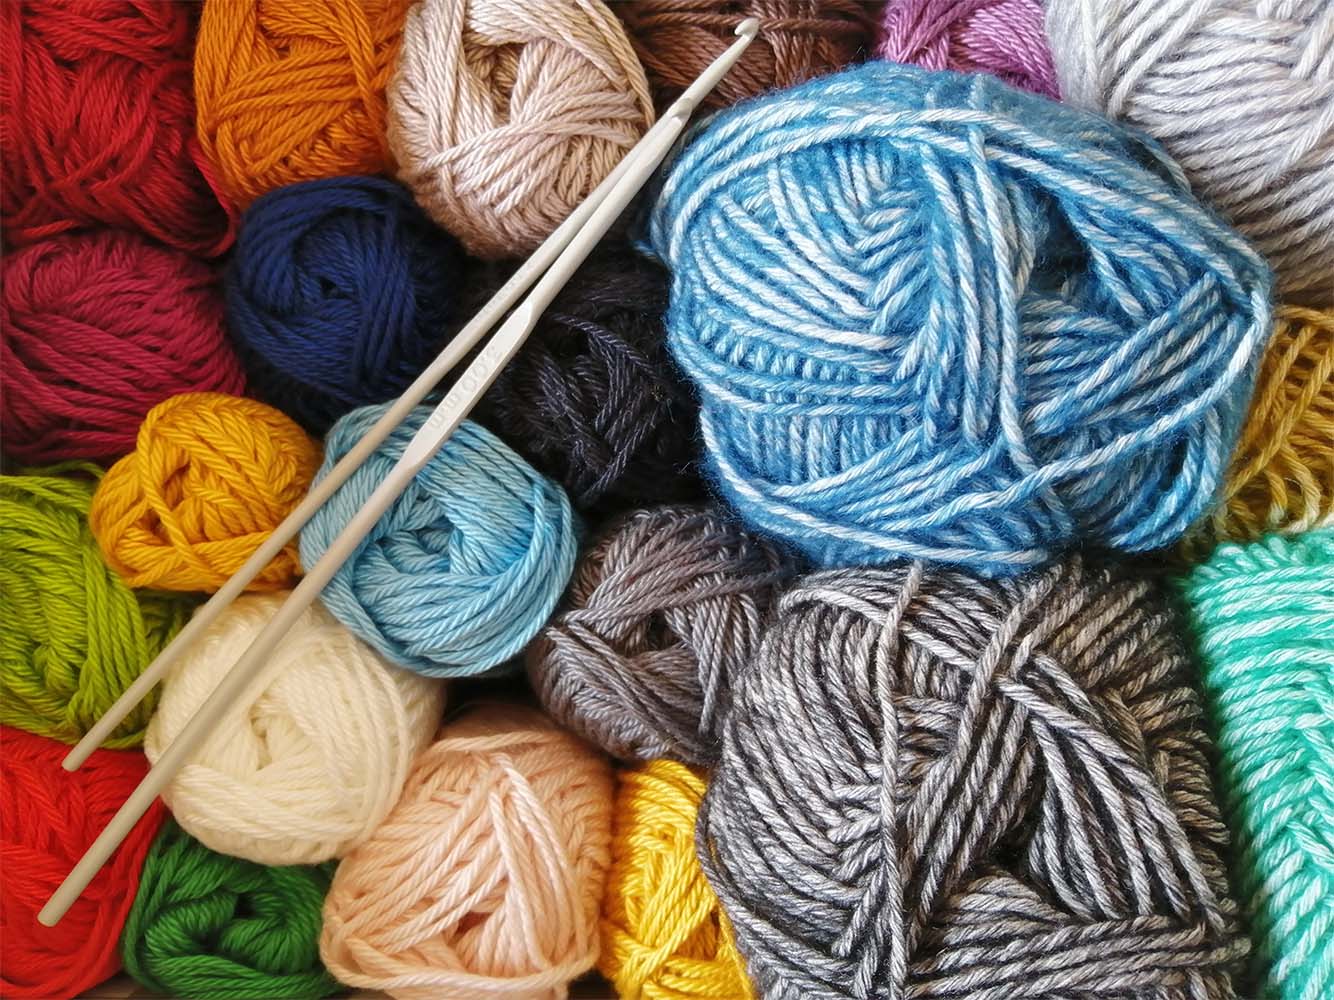 Balls of knitting wool